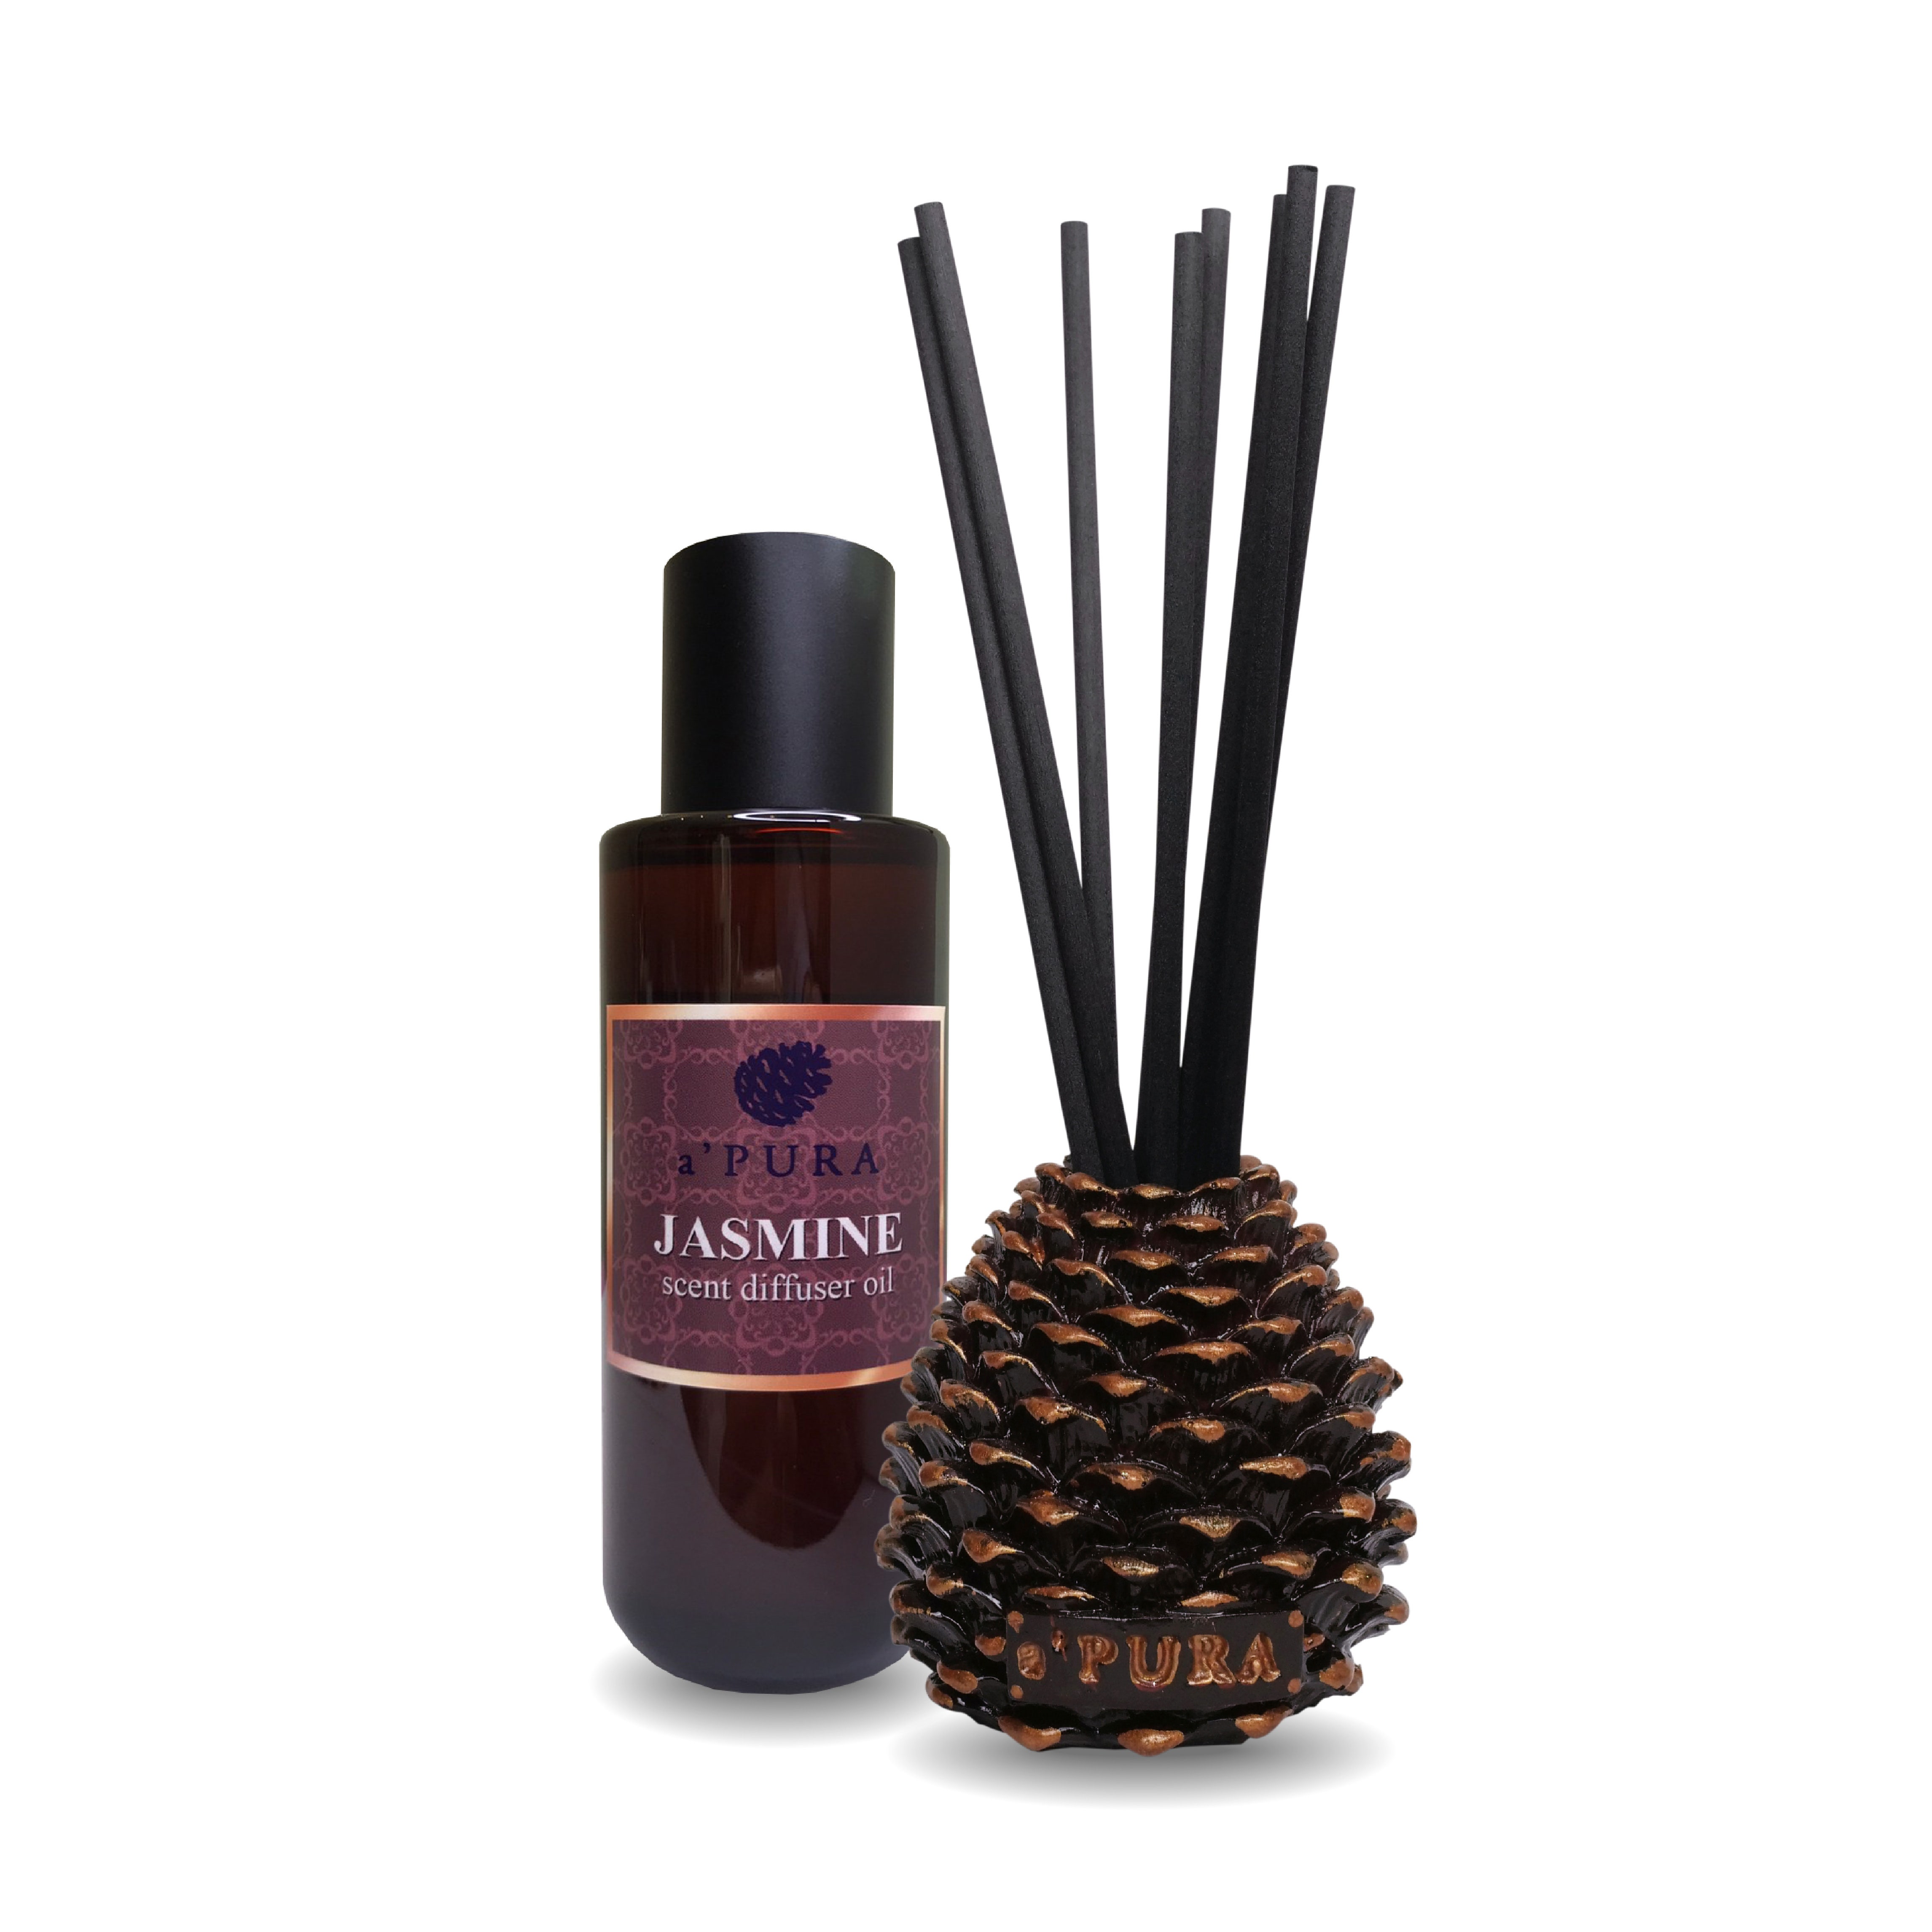 a ฟุตPURA Reed Diffuser jasmine scent. ก้านไม้หอมกลิ่นมะลิ1